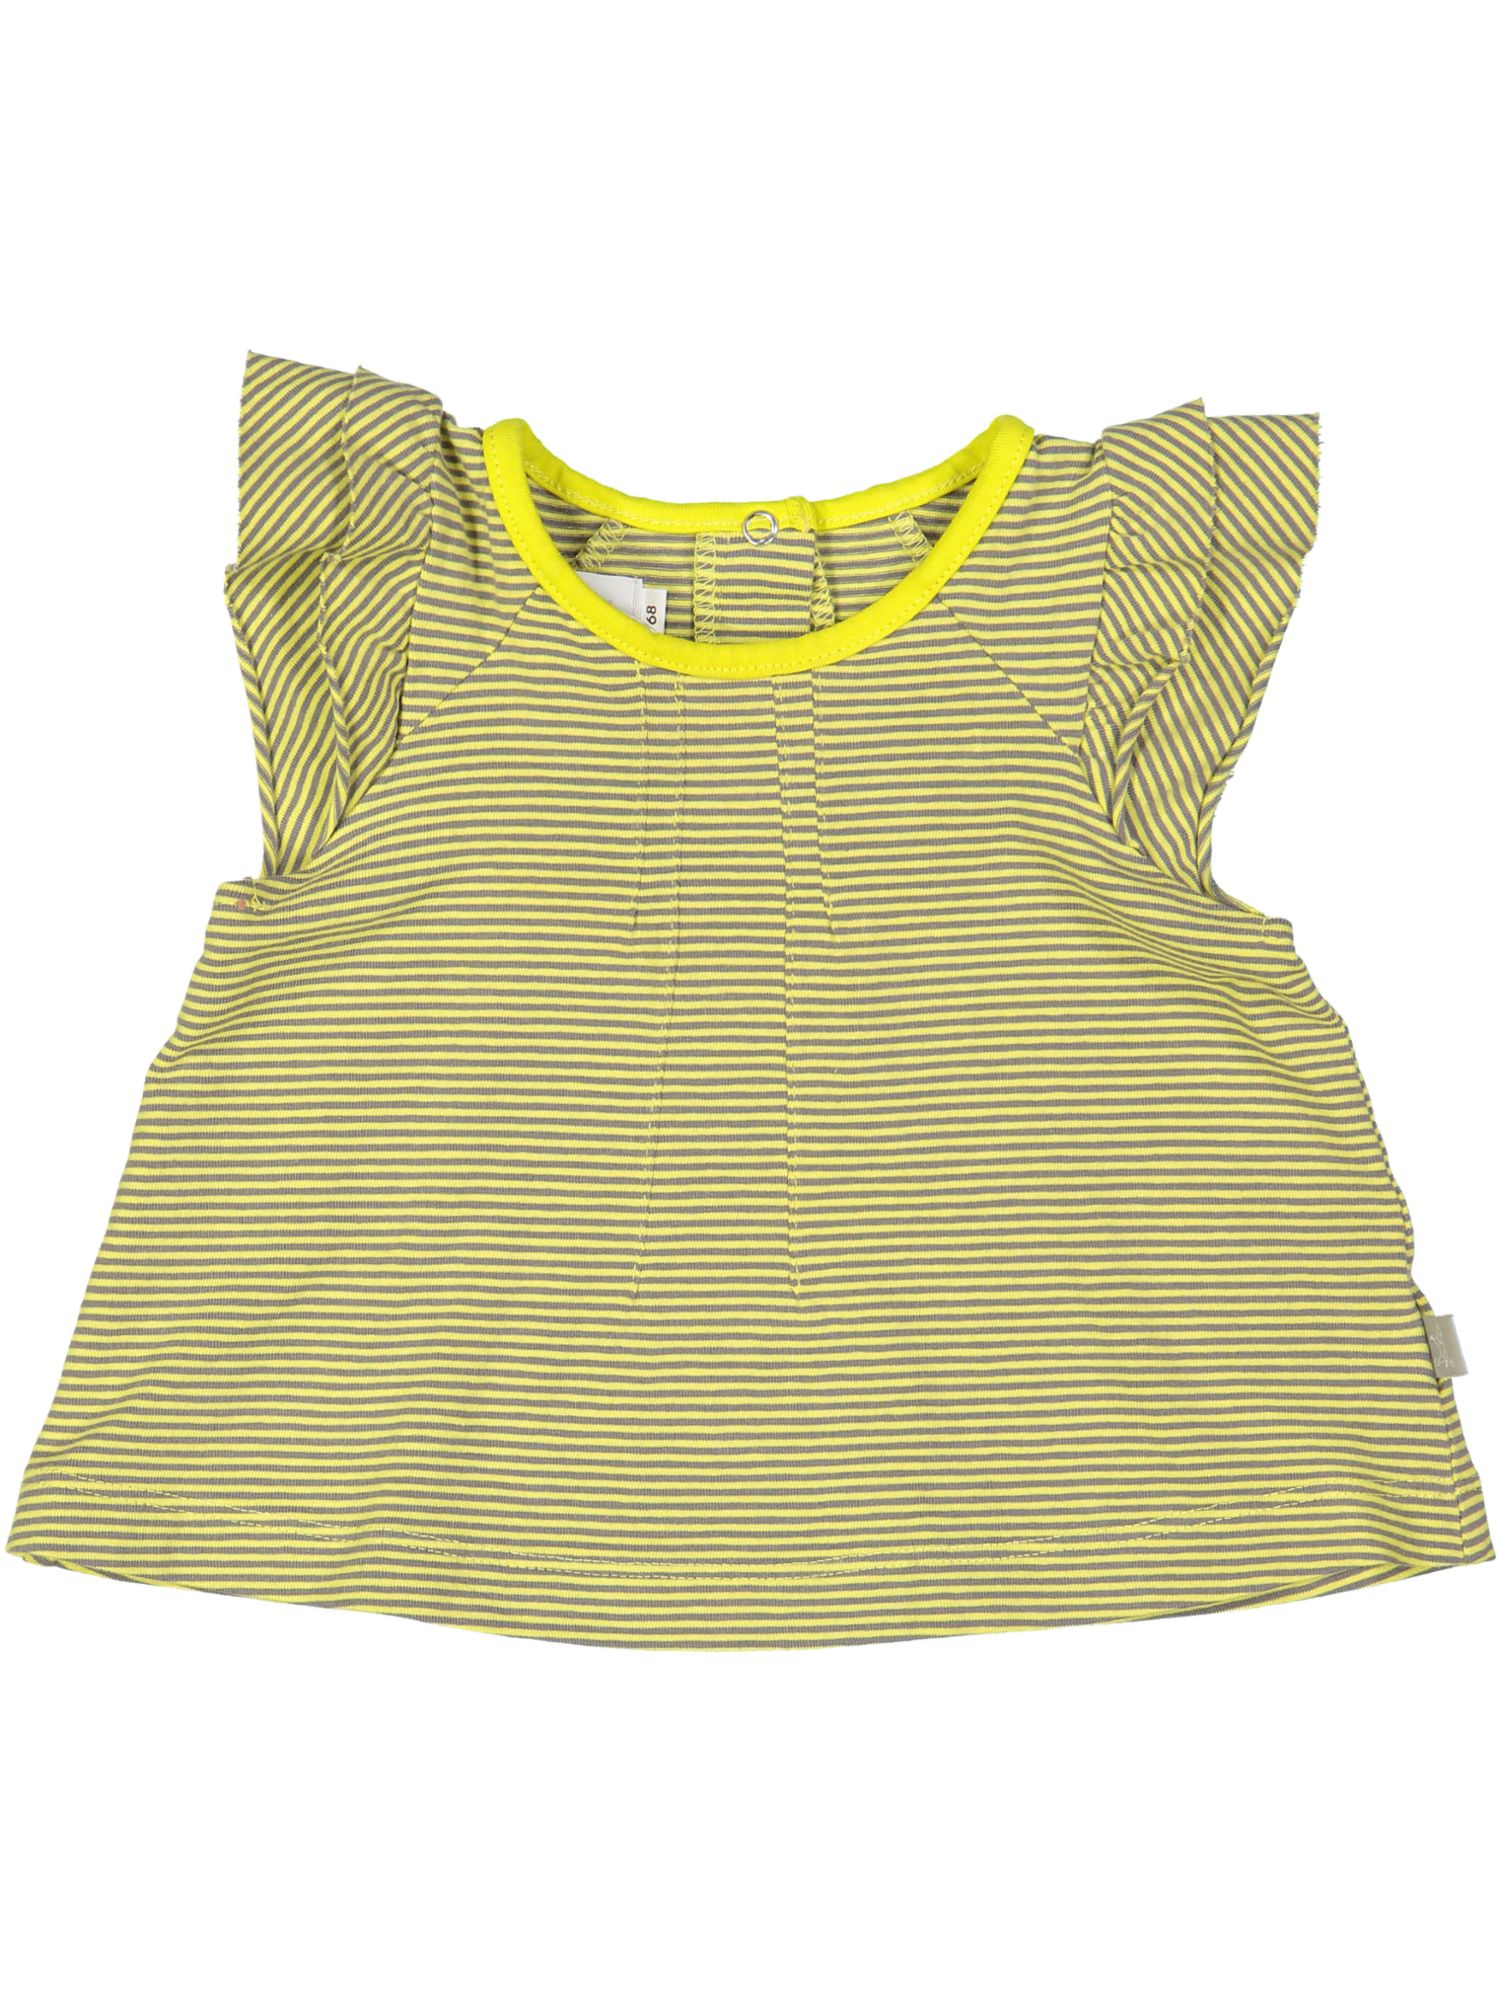 t-shirt geel streep 06m